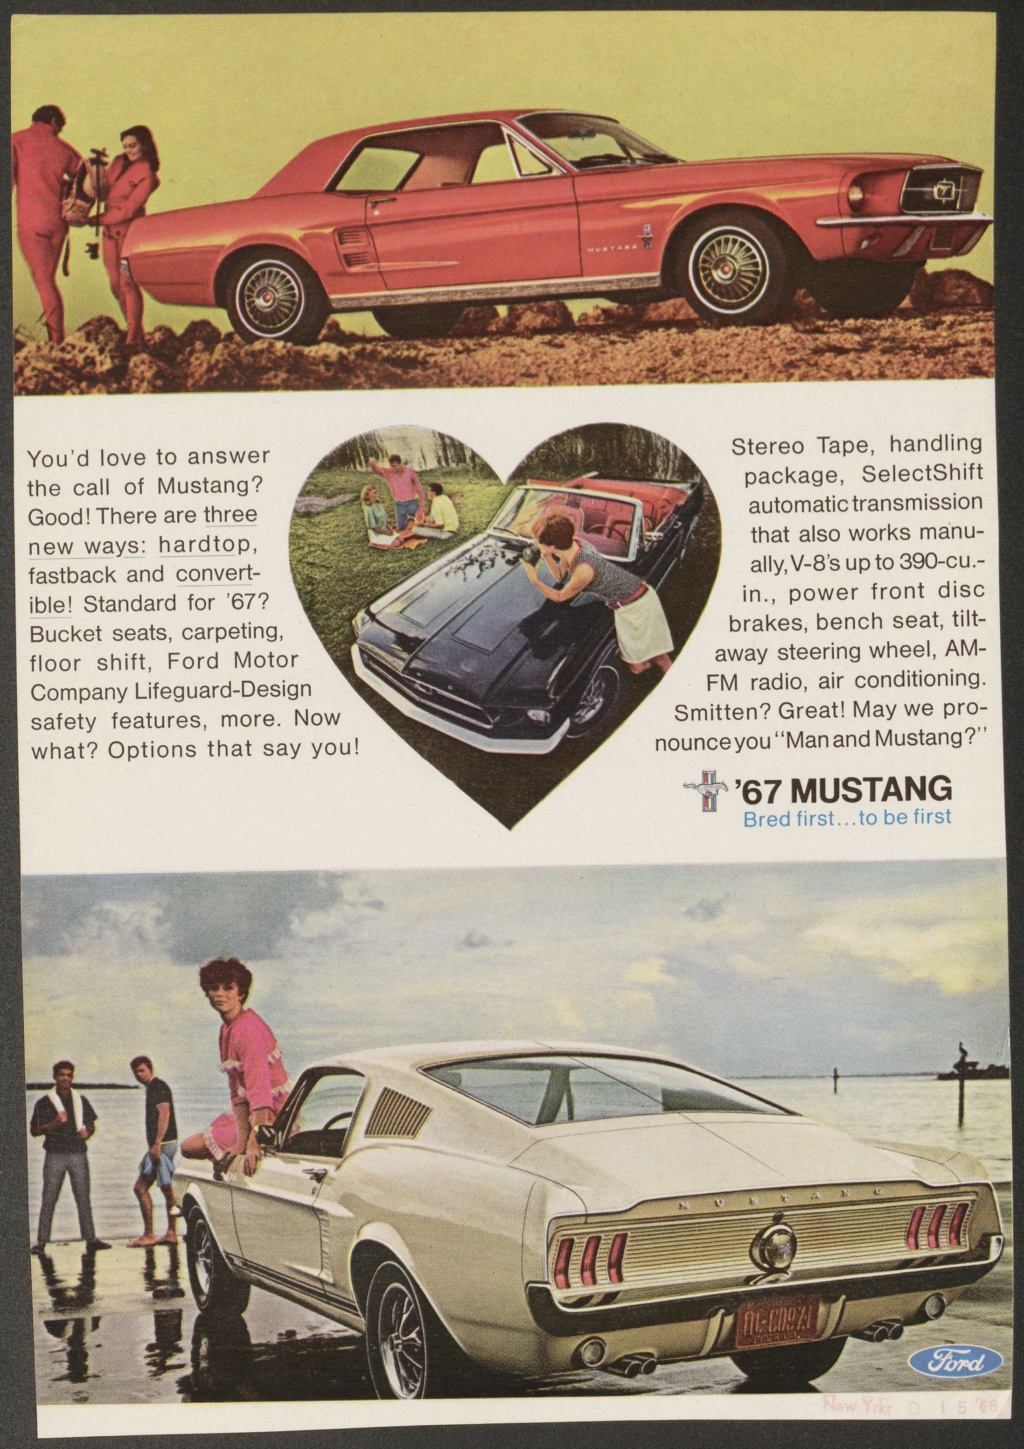 Publicité Mustang 1967 , collection J. Walter Thompson pour la Ford Motor Company.  Jwtad325